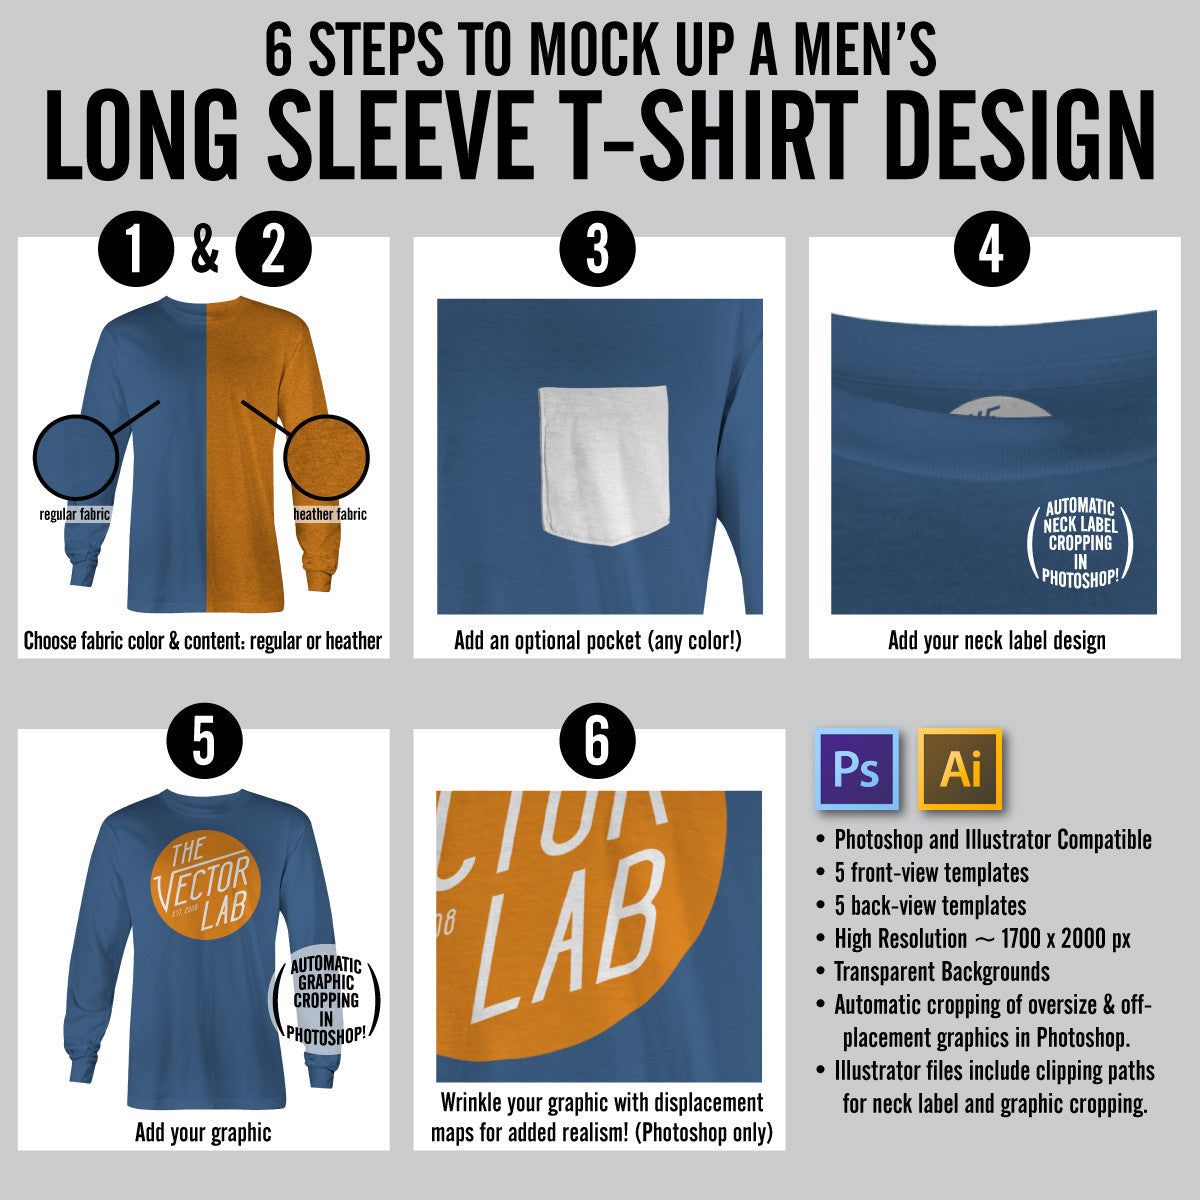 Download Men's Long Sleeve T-Shirt Mockup Templates - TheVectorLab